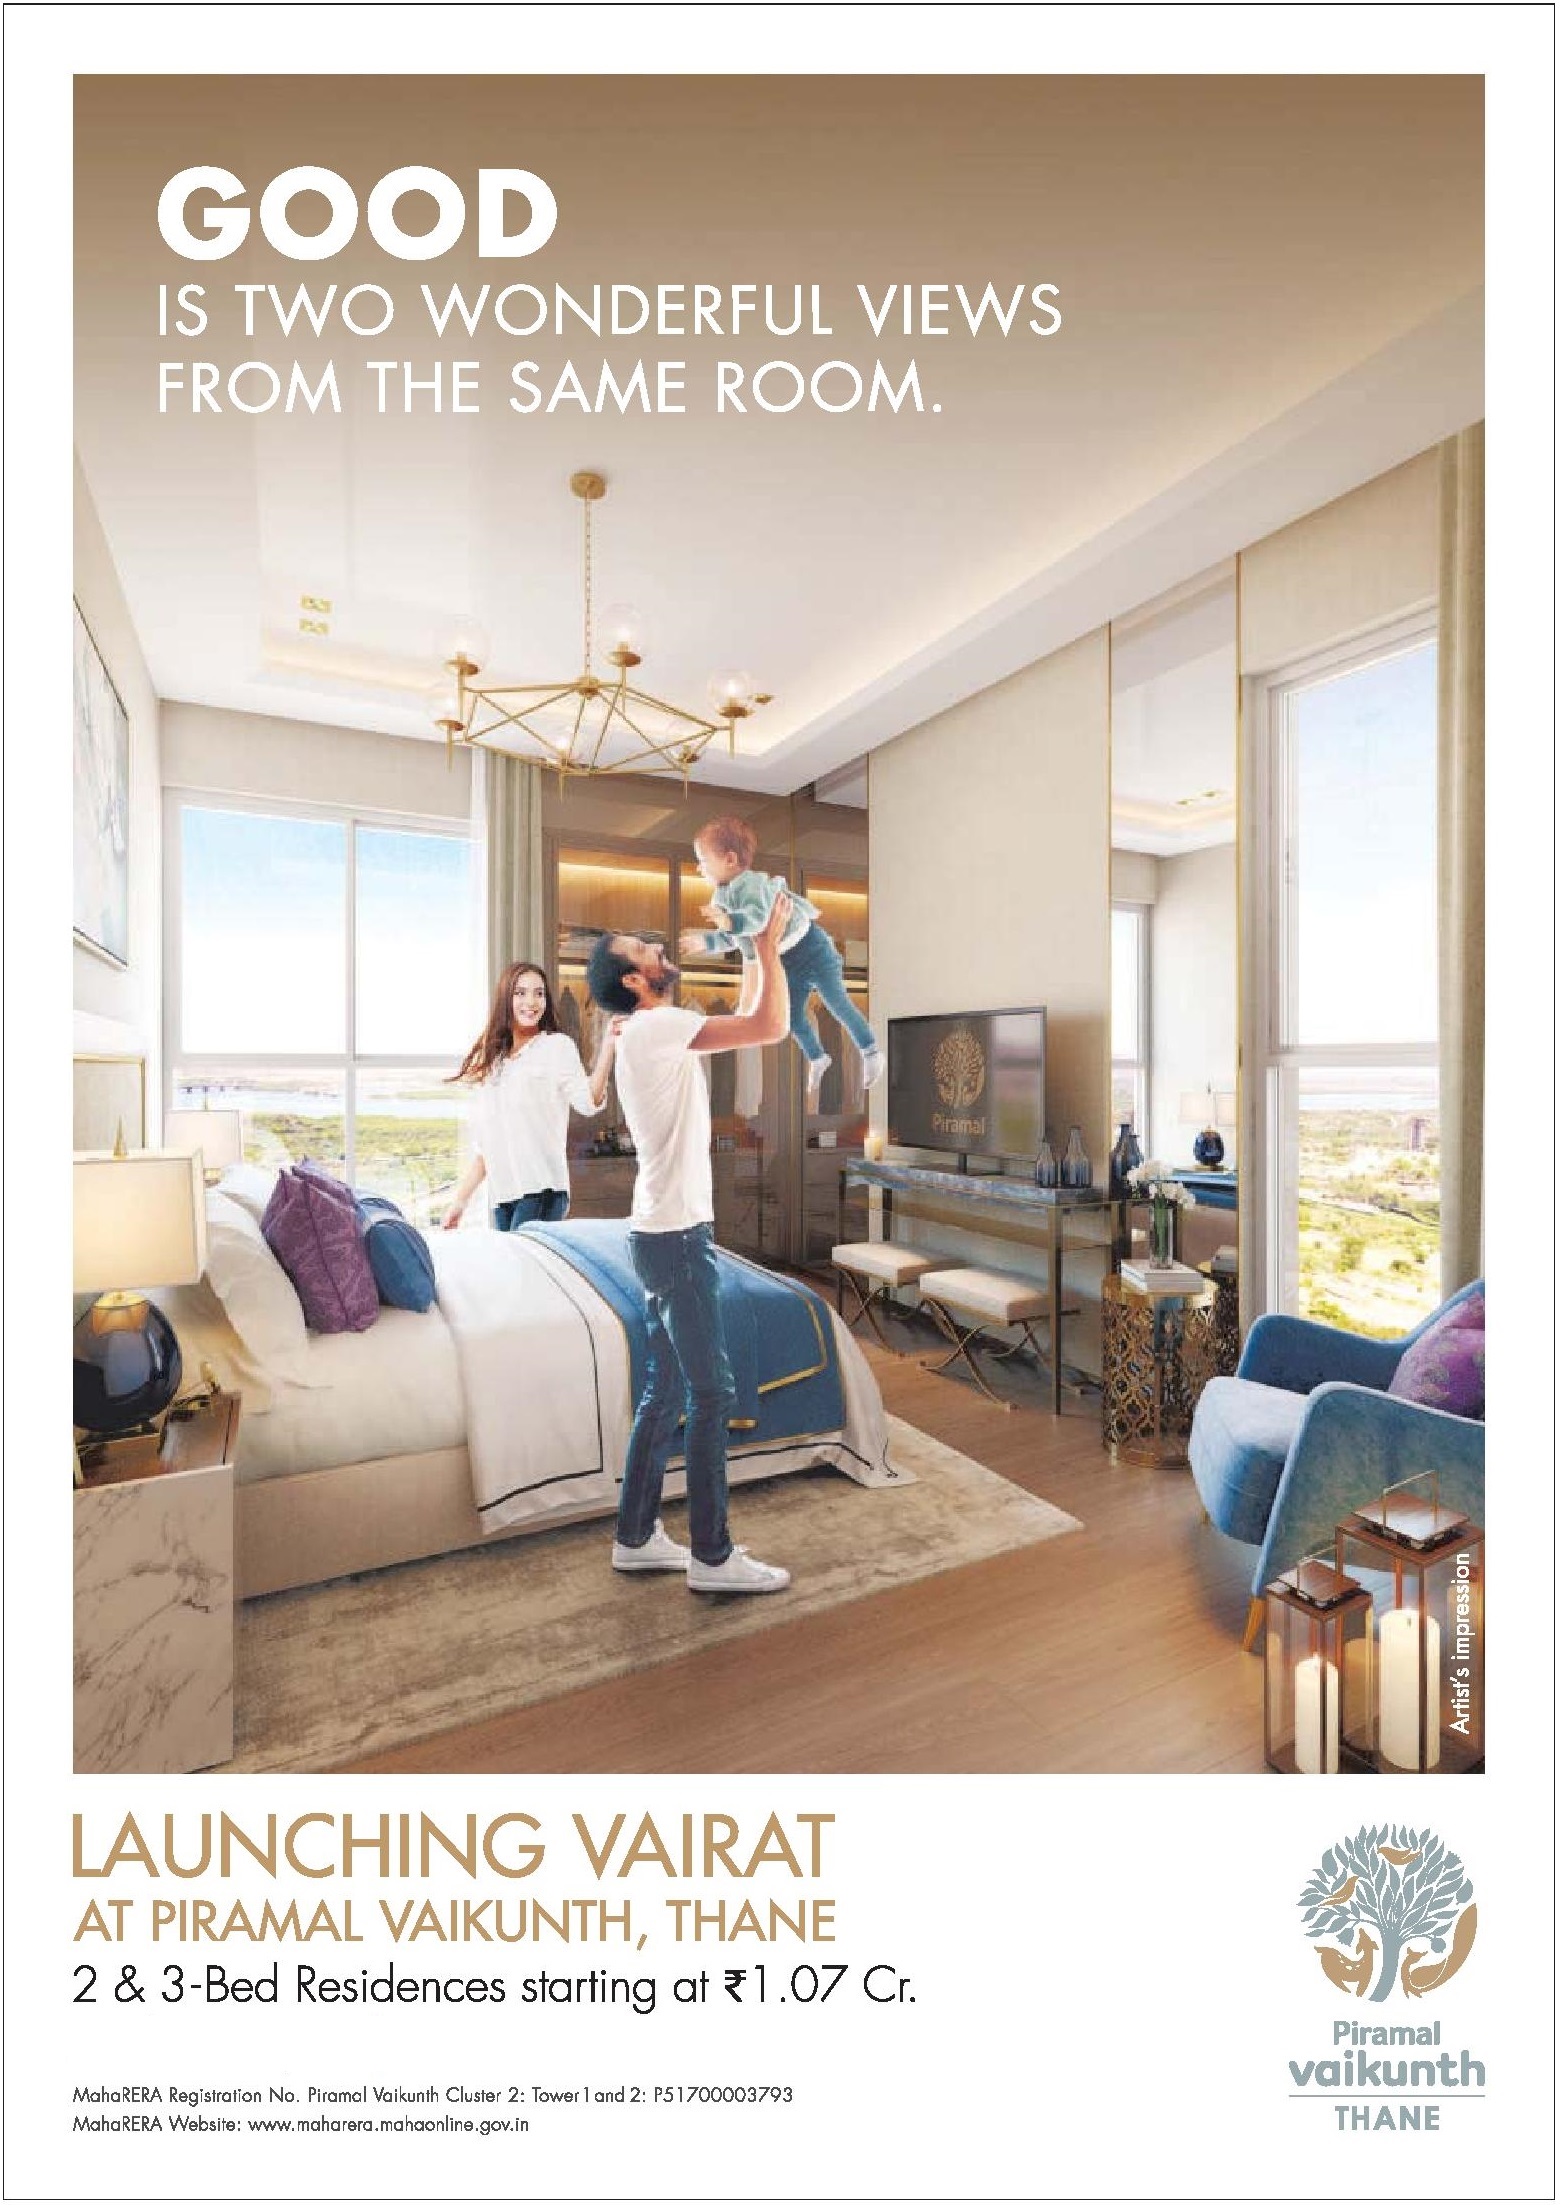 Avail 2 & 3 Bed Residences @ Rs 1.07 Cr. at Piramal Vaikunth in Mumbai Update